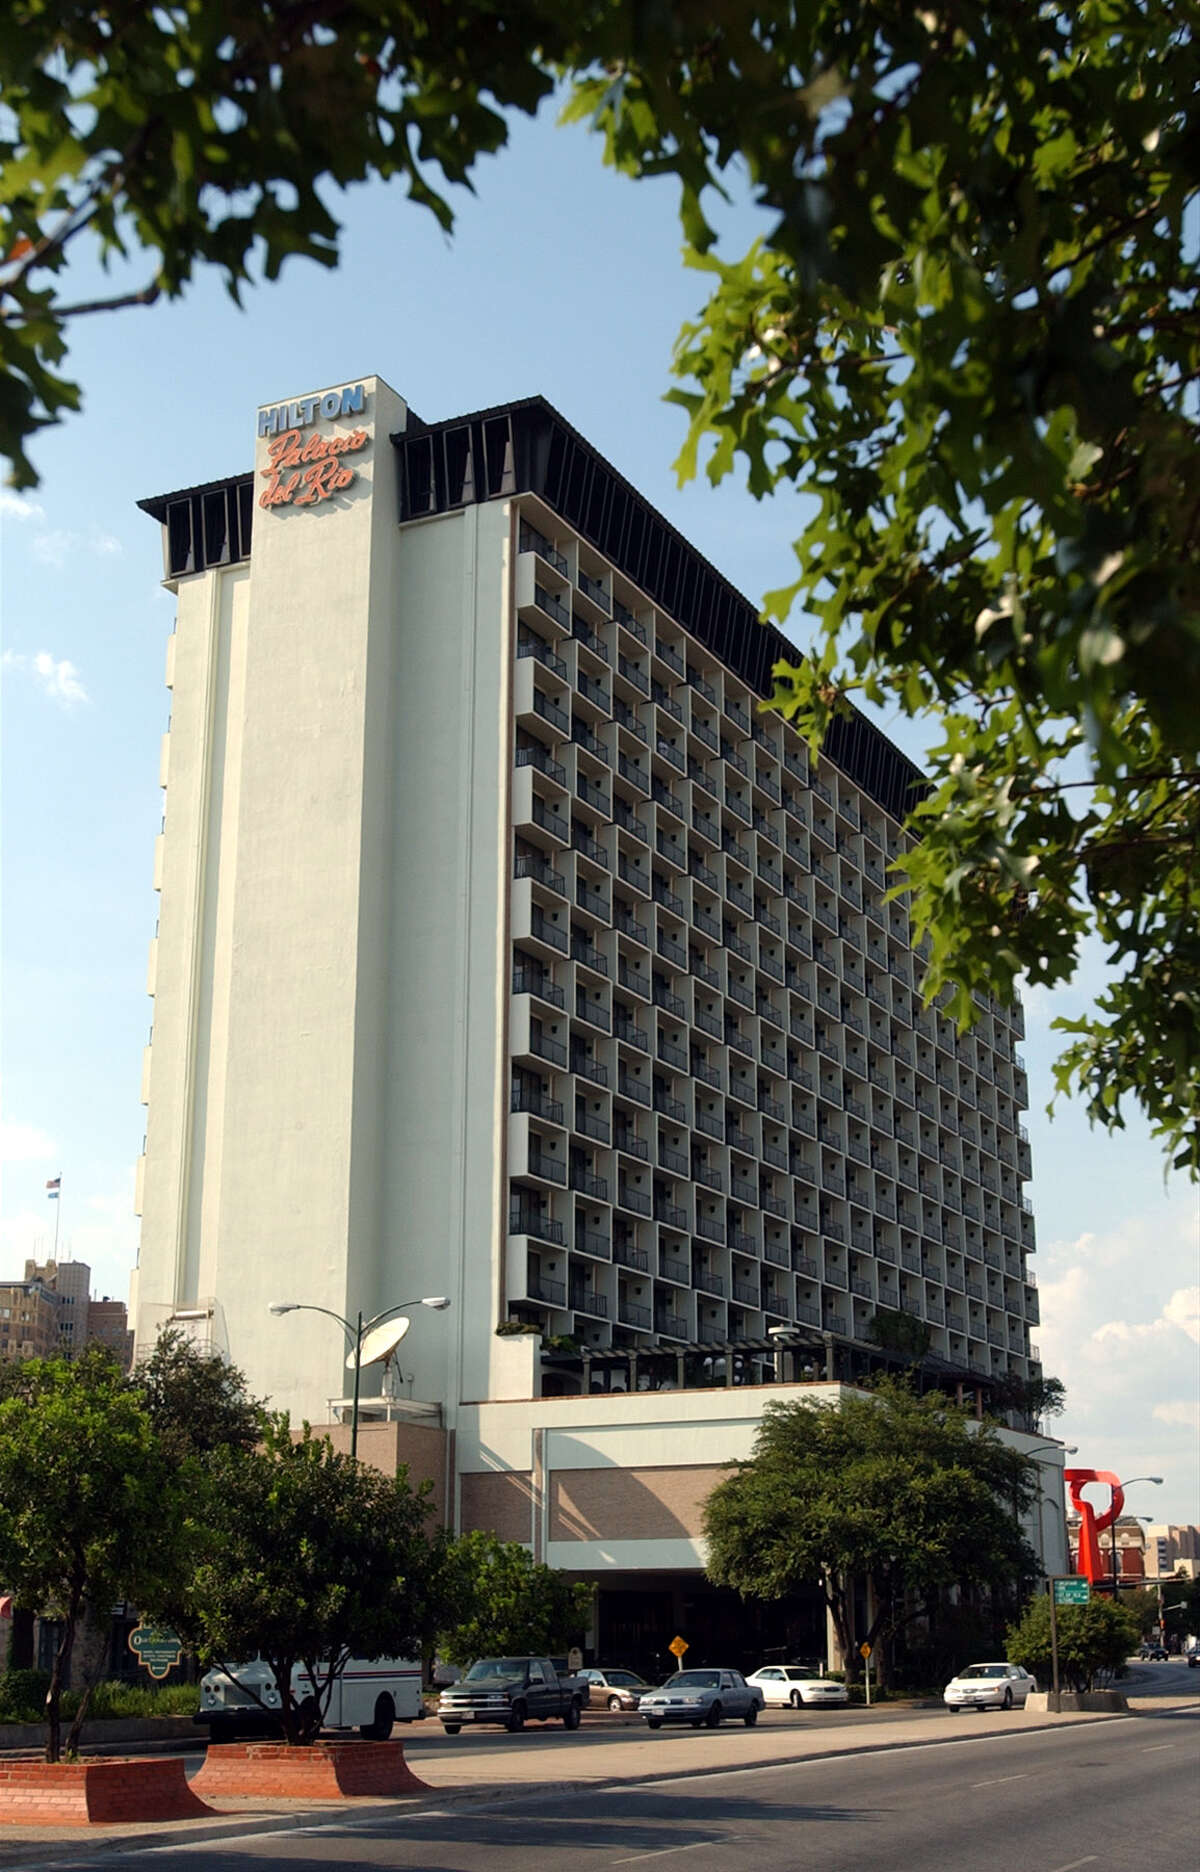 The Hilton Palacio del Rio Hotel.